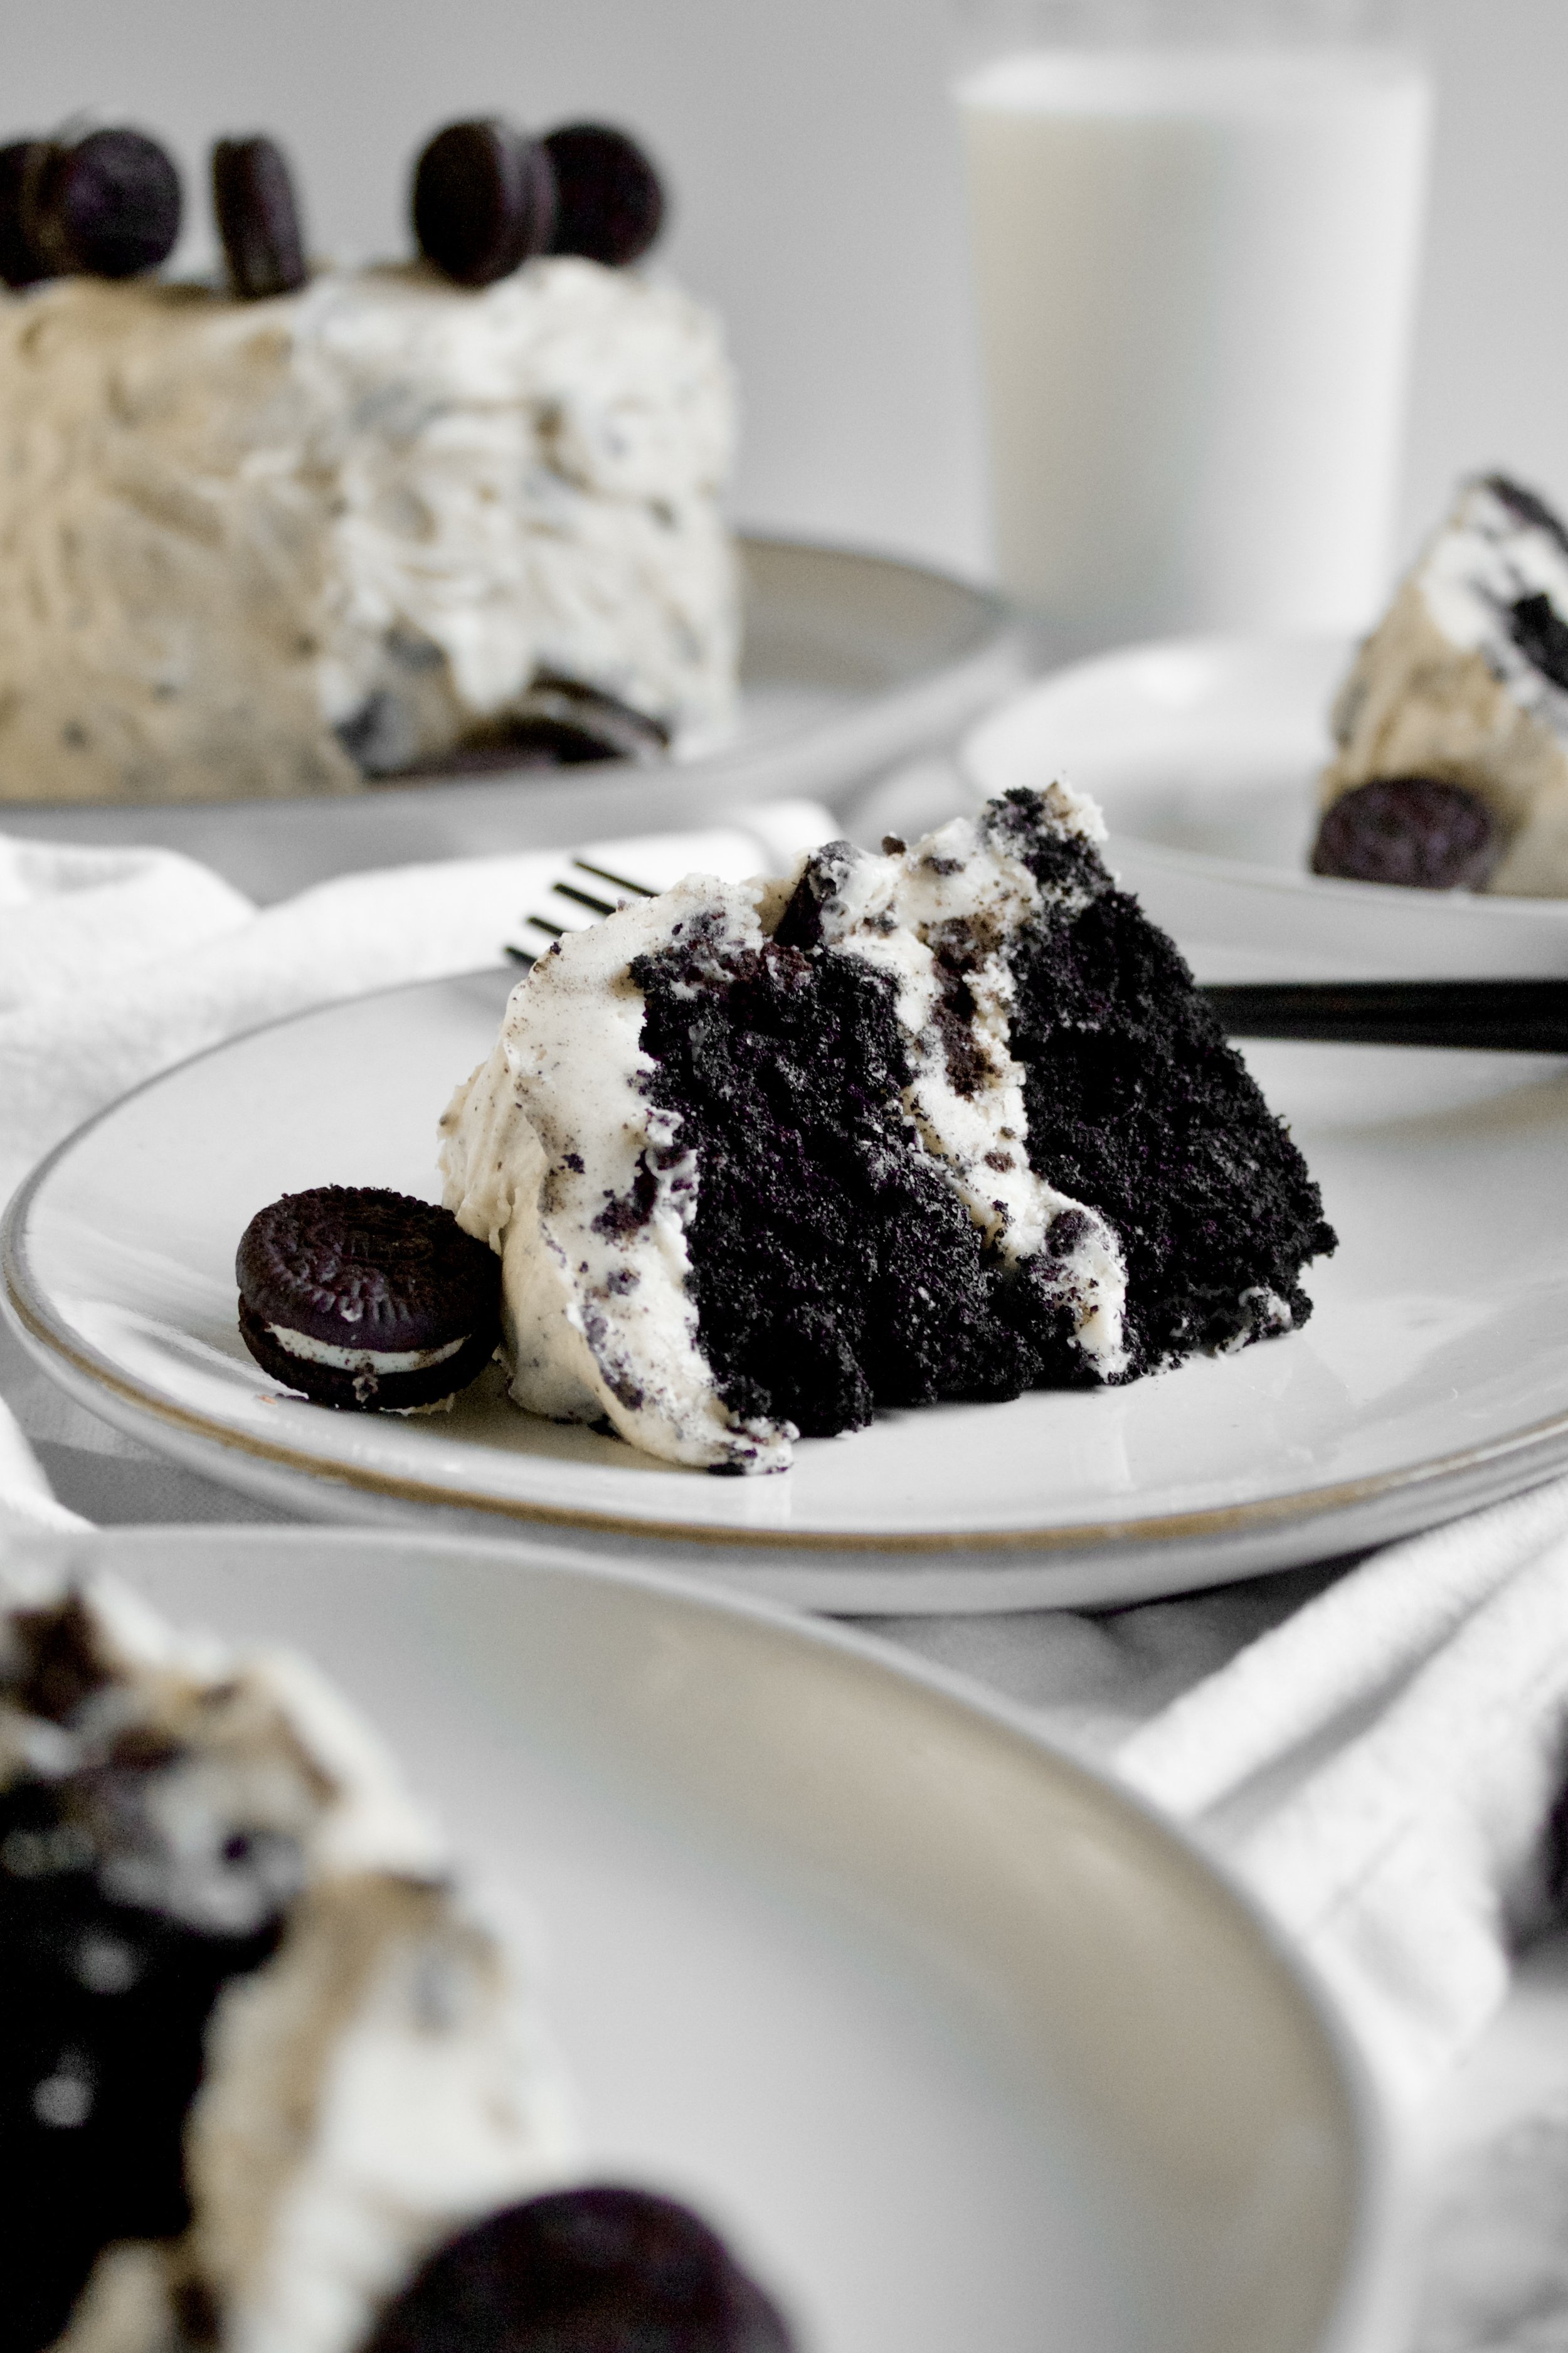 New Oreo flavor: 'Blackout Cake' Oreos have 2 chocolate creme layers